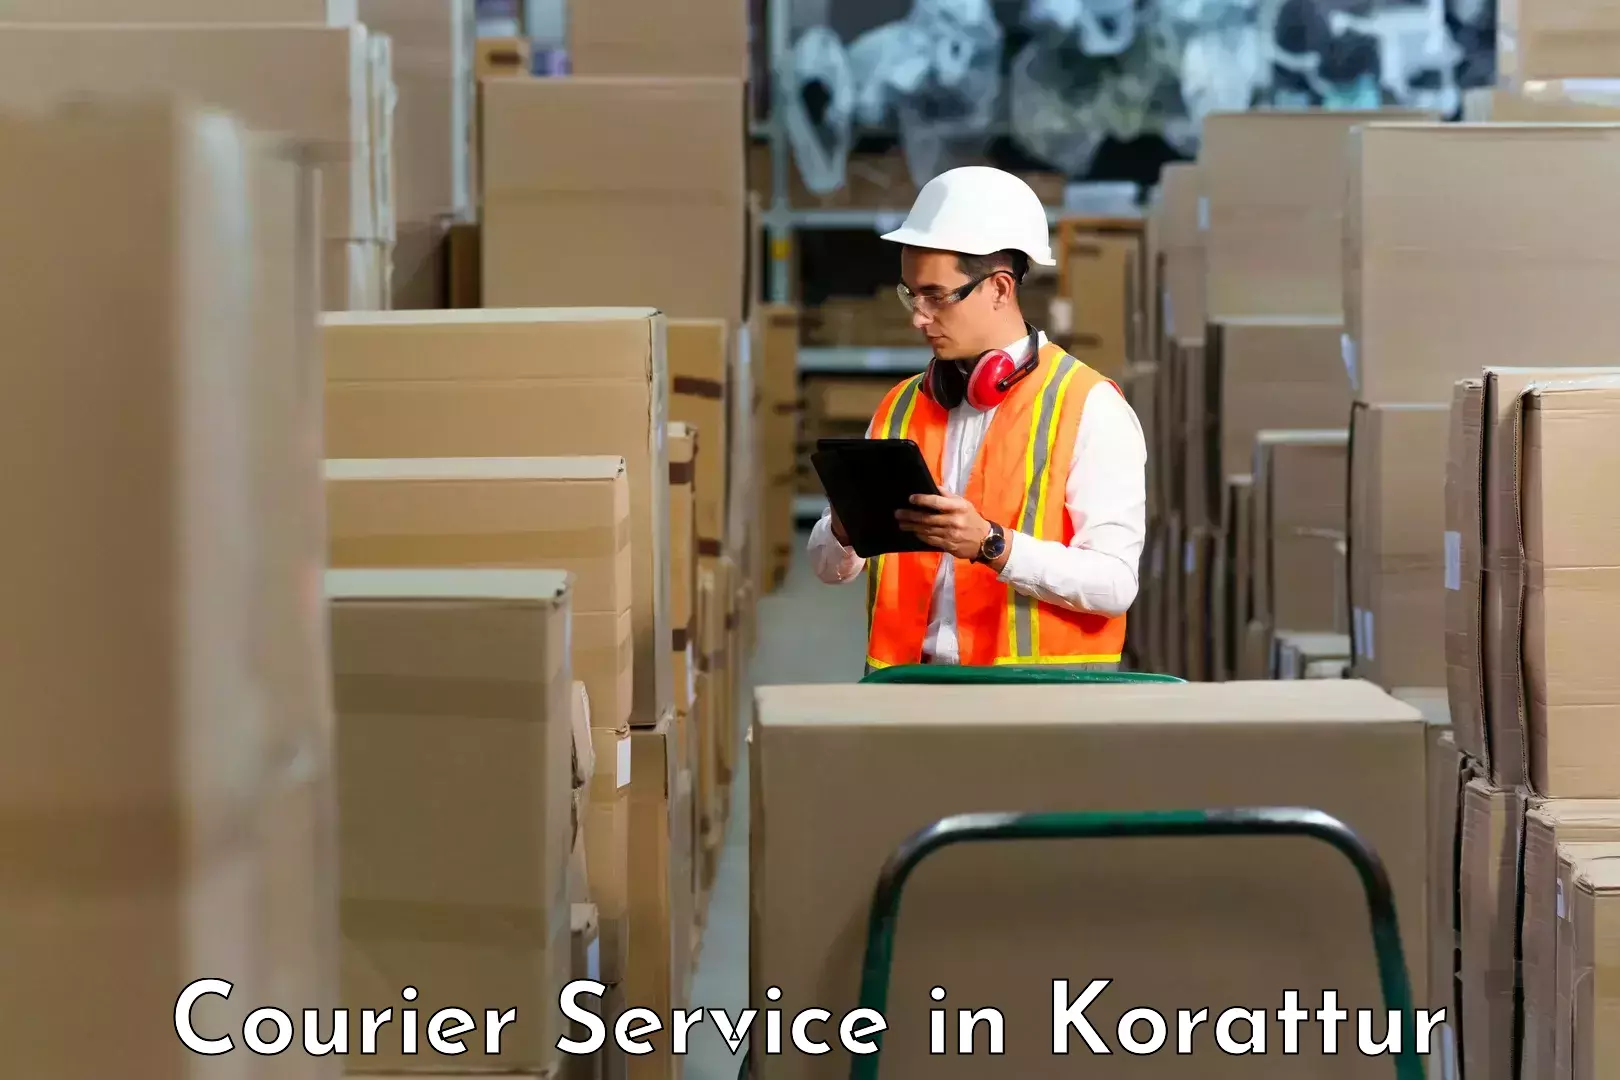 High-speed delivery in Korattur